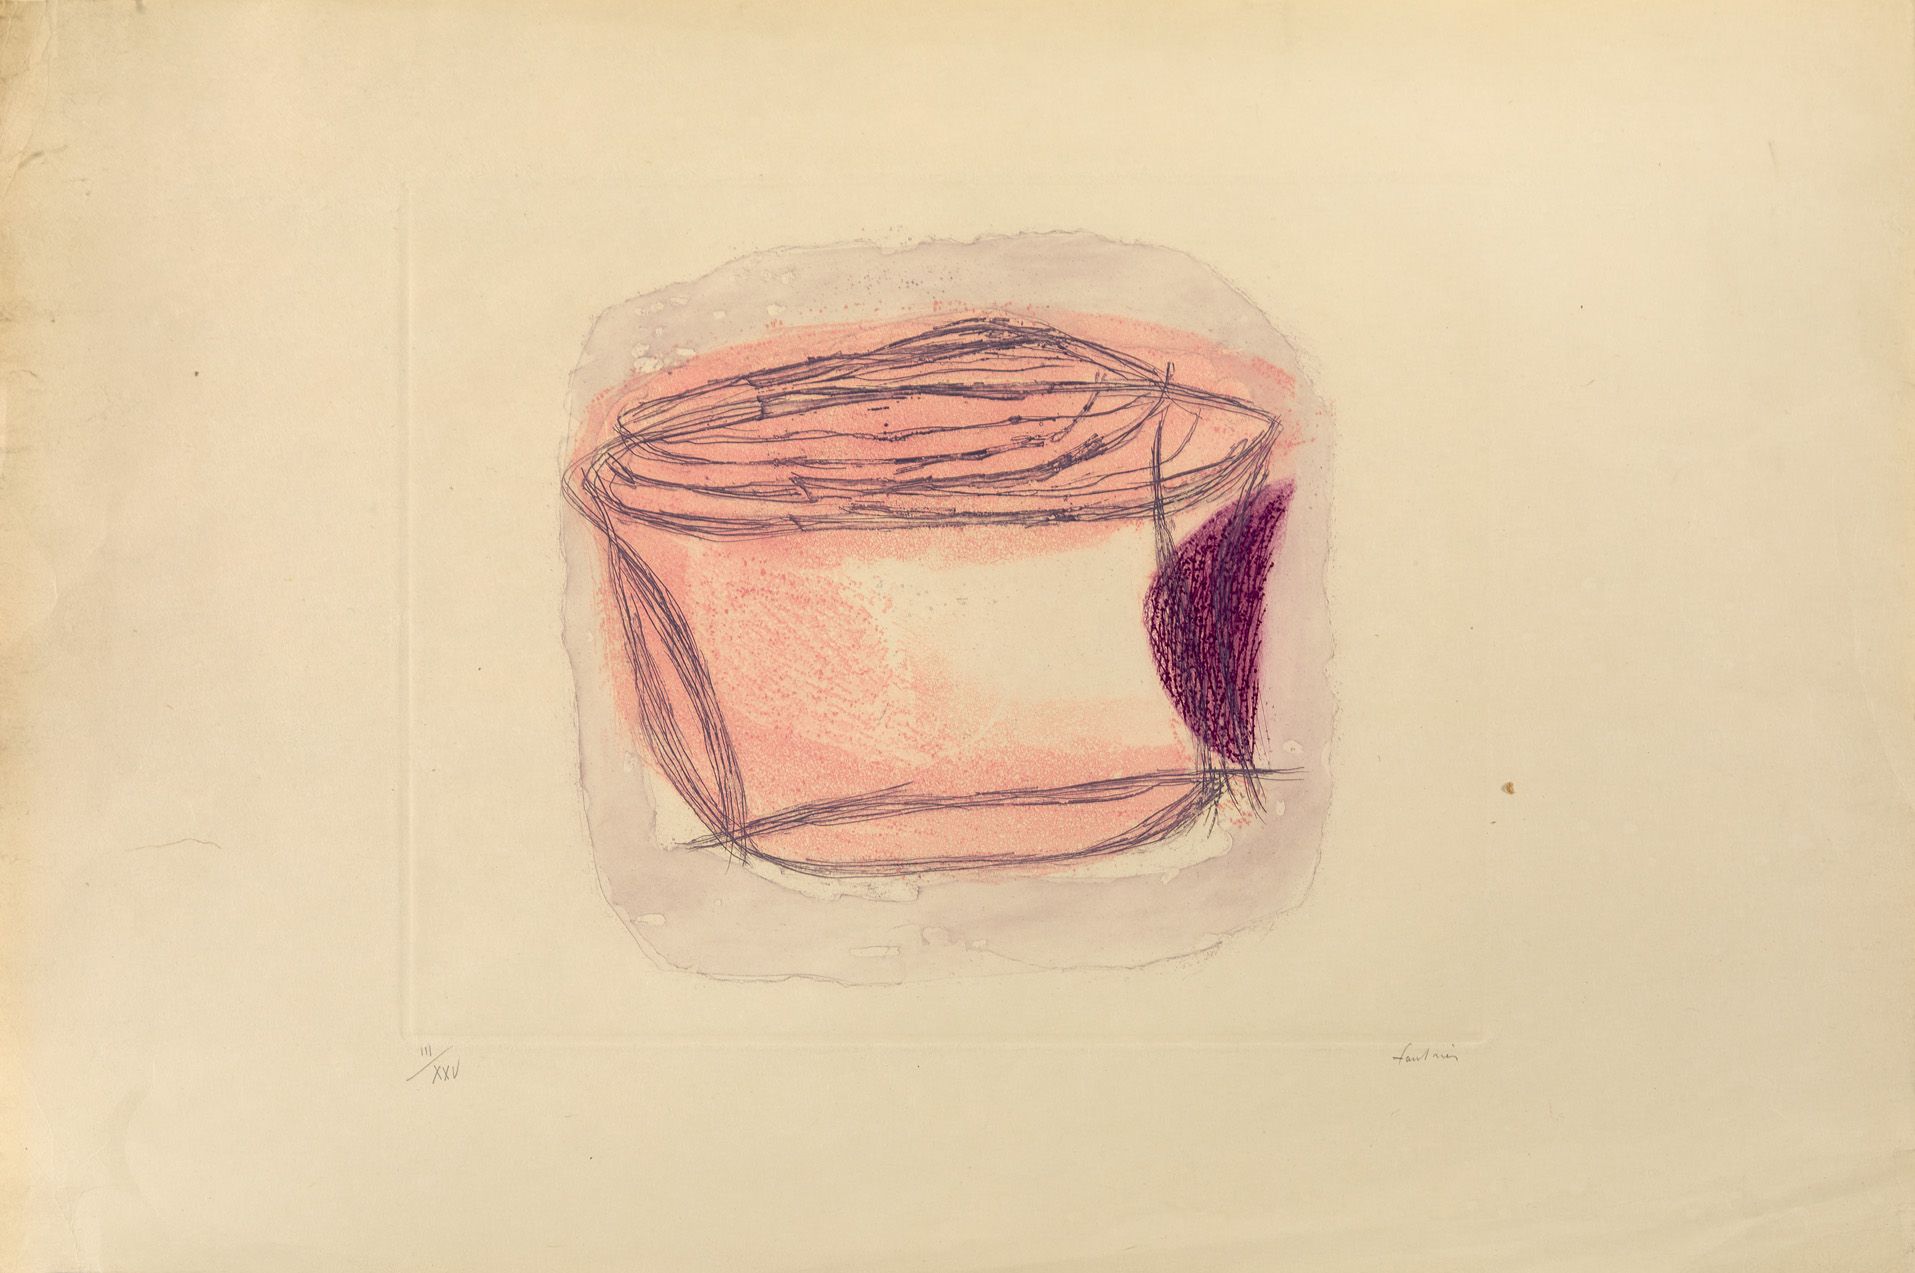 Jean FAUTRIER 让-福里埃 (1898 - 1964)

盒子

彩色蚀刻和水印在老式日本纸上，标题为 "III/XXV"，右下方有签名。

高度2&hellip;